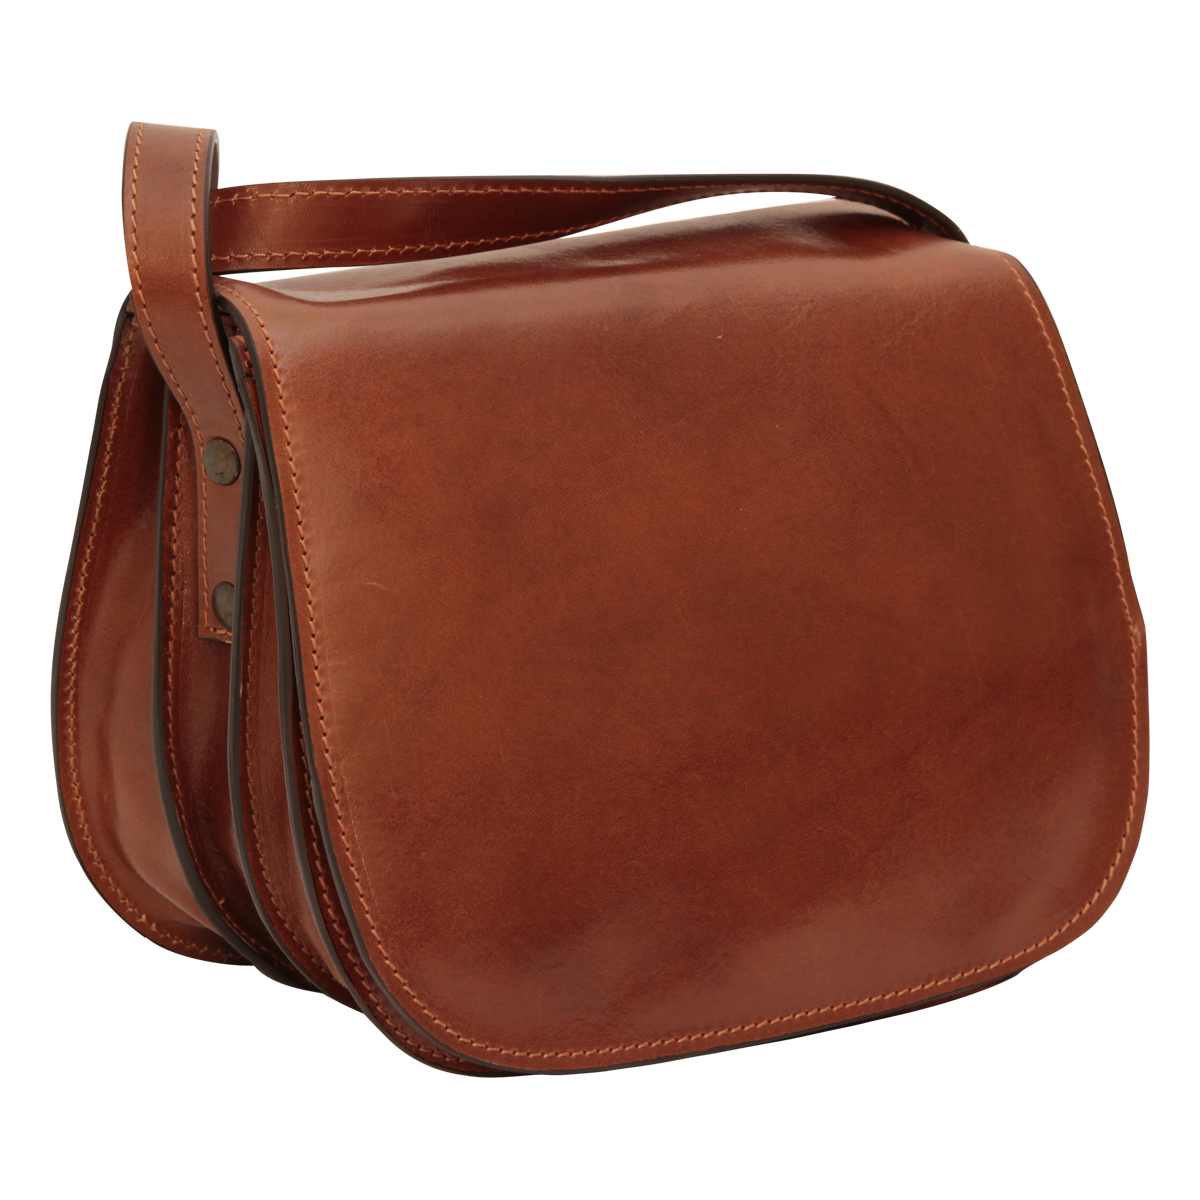 Full grain calfskin shoulder bag - brown | 209805MA | EURO | Old Angler Firenze